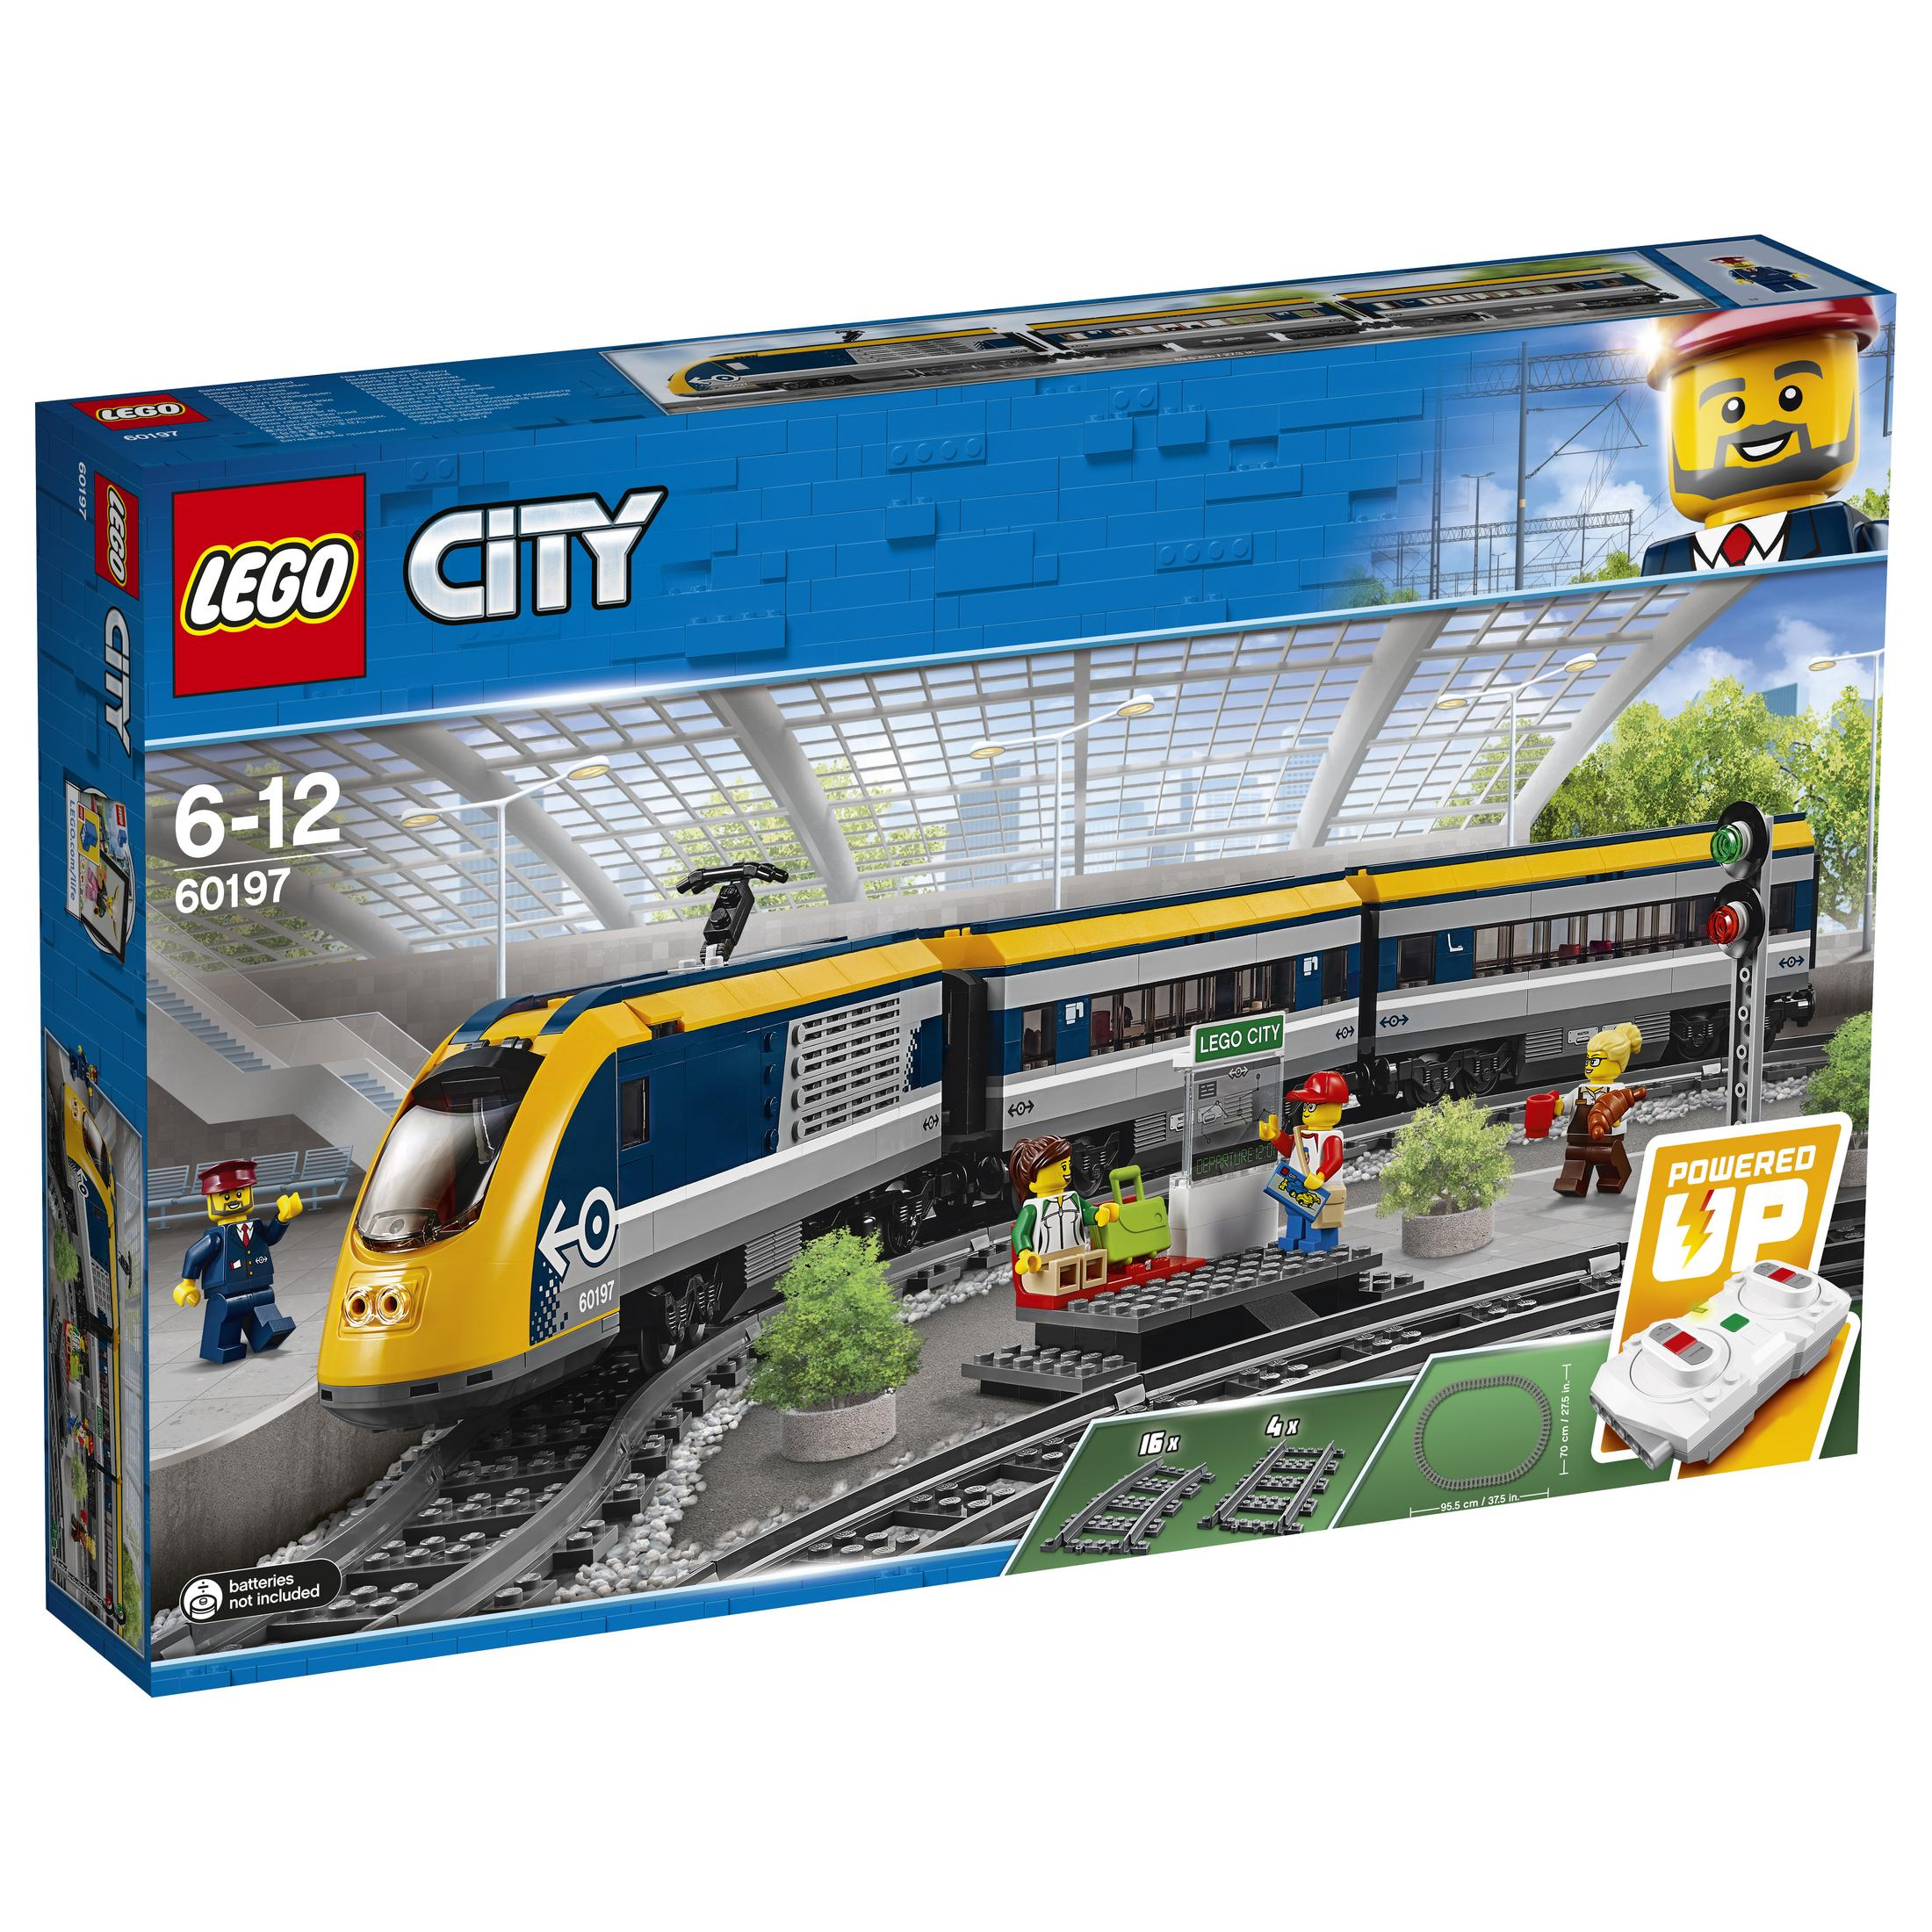 LEGO 60197 PERSONENZUG Bausatz, Mehrfarbig